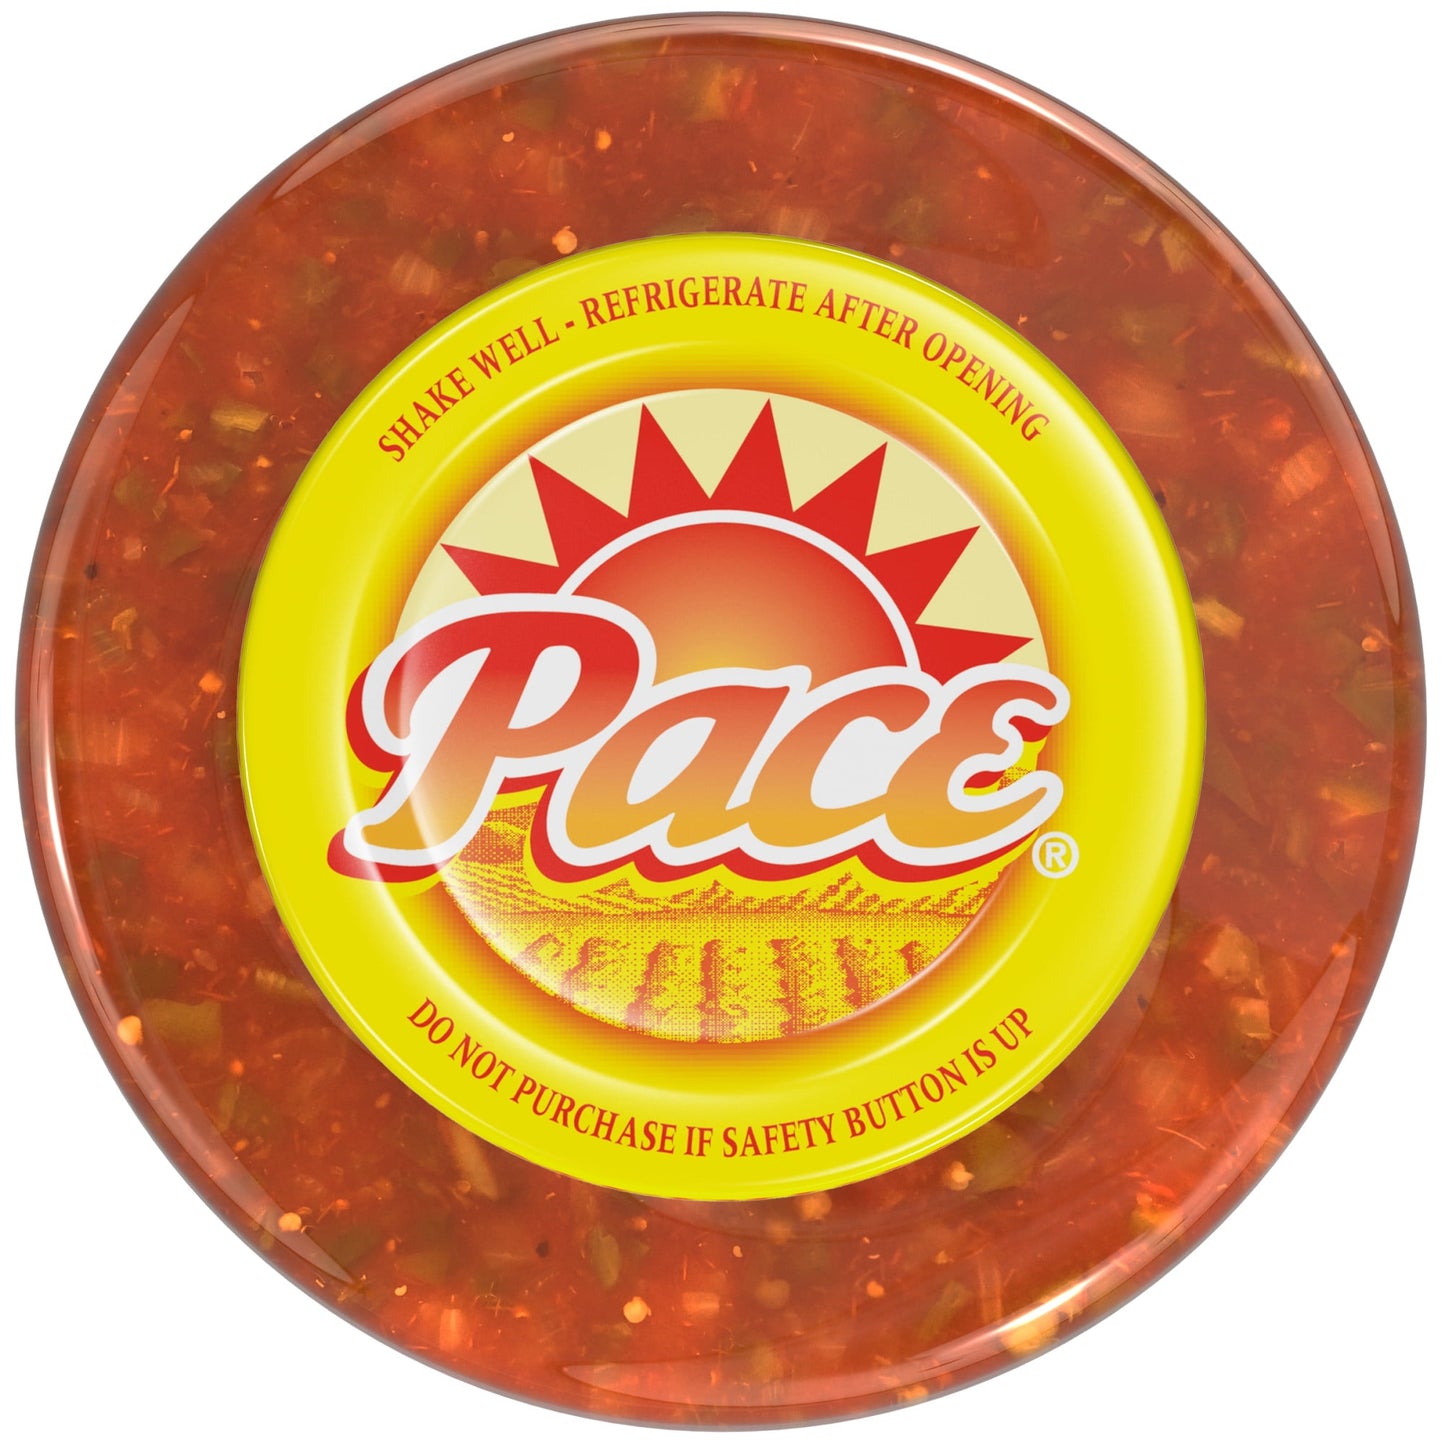 Pace Chunky Salsa Medium, 24 oz Jar